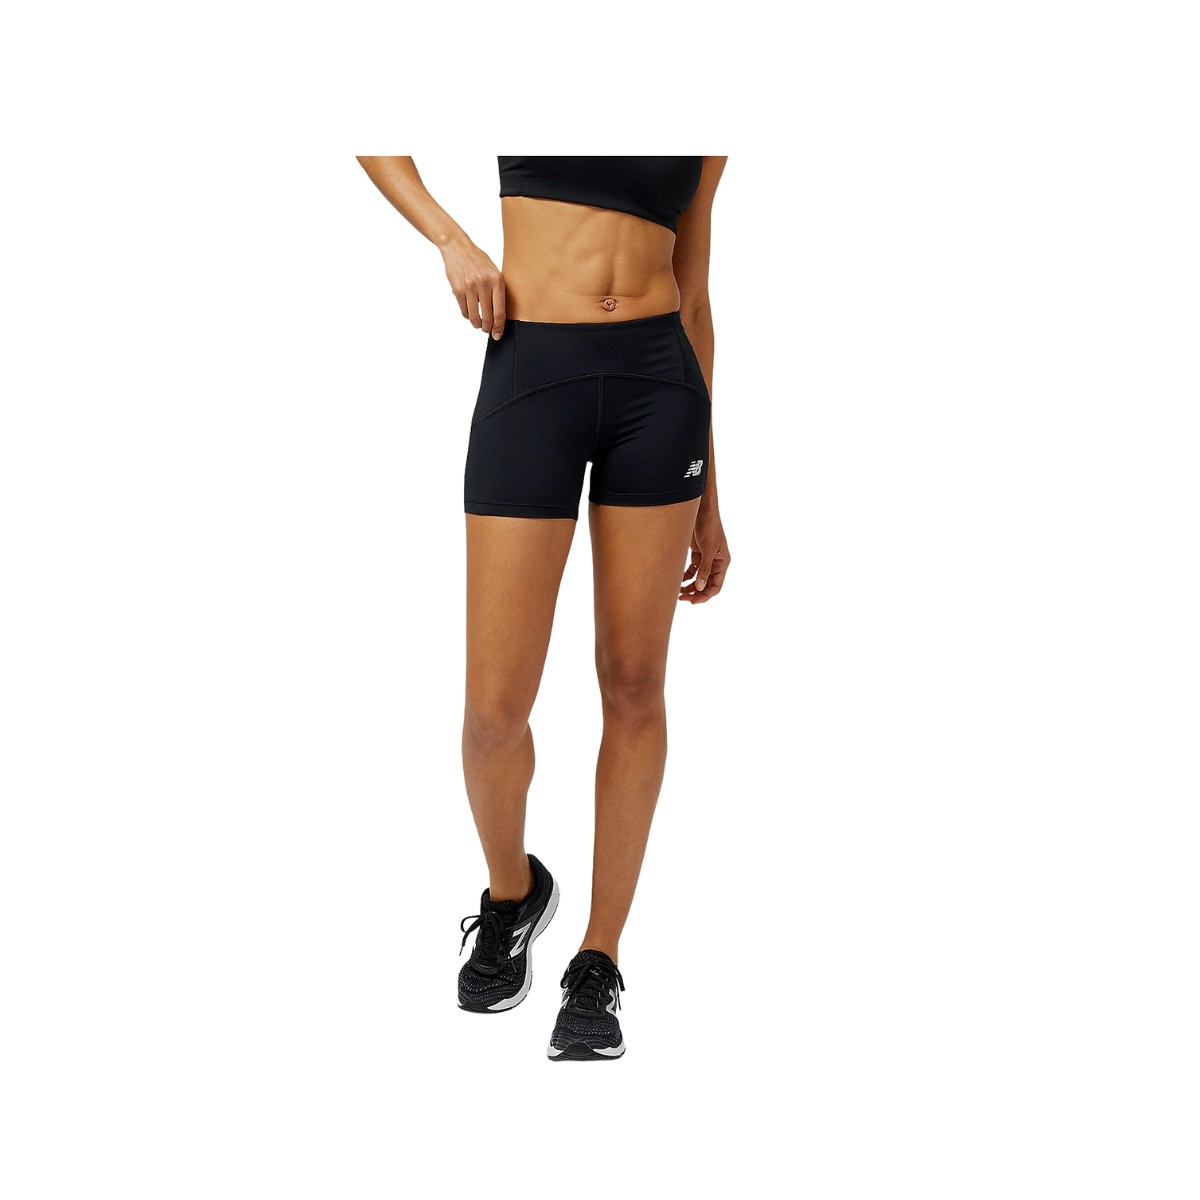 New Balance Accelerate Pacer 3,5 polegadas justo curto feminino preto